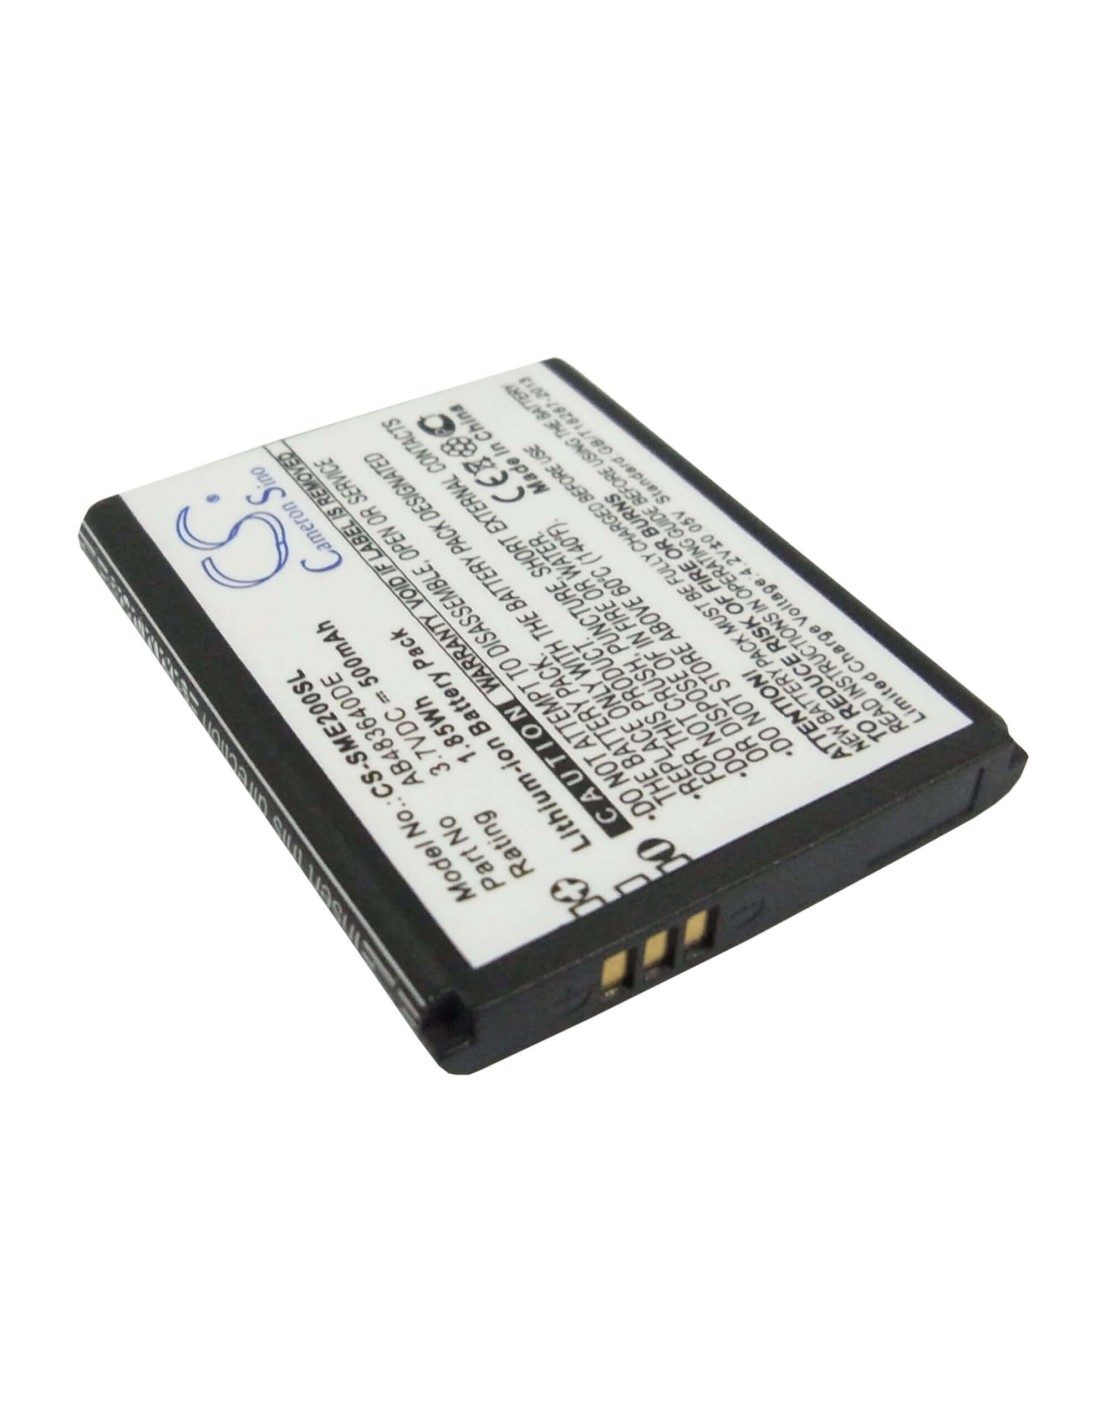 Battery for Samsung SGH-E200, SGH-E208, SCH-S259 3.7V, 500mAh - 1.85Wh